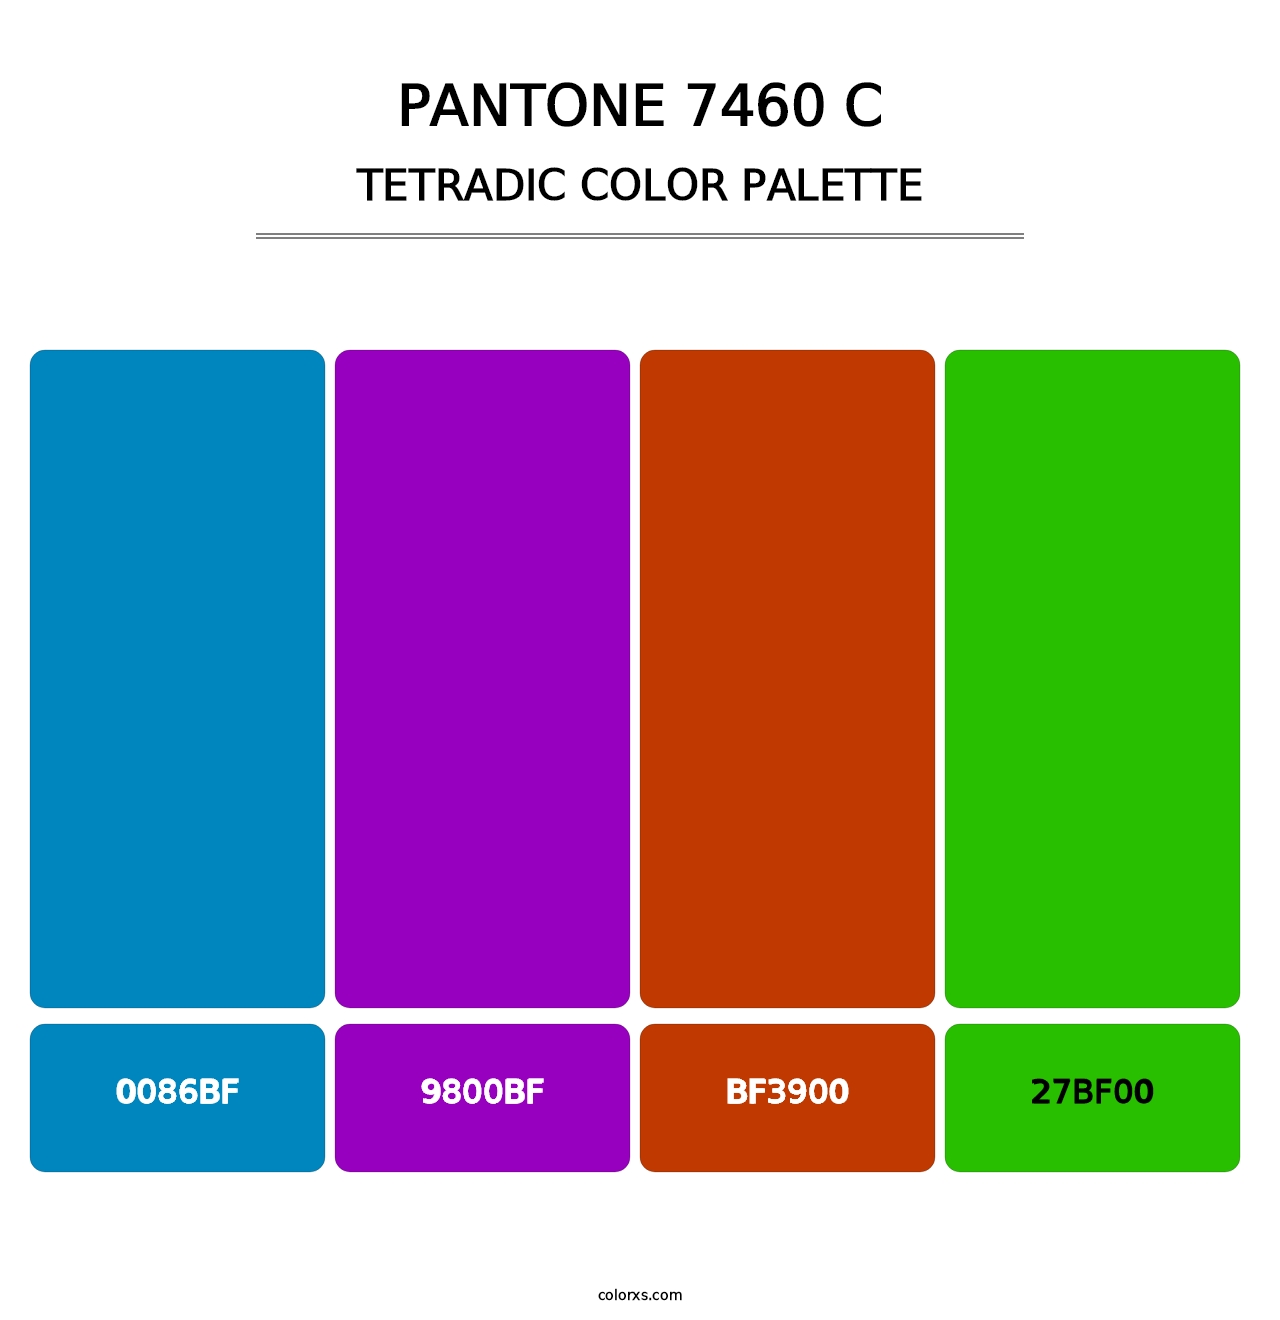 PANTONE 7460 C - Tetradic Color Palette